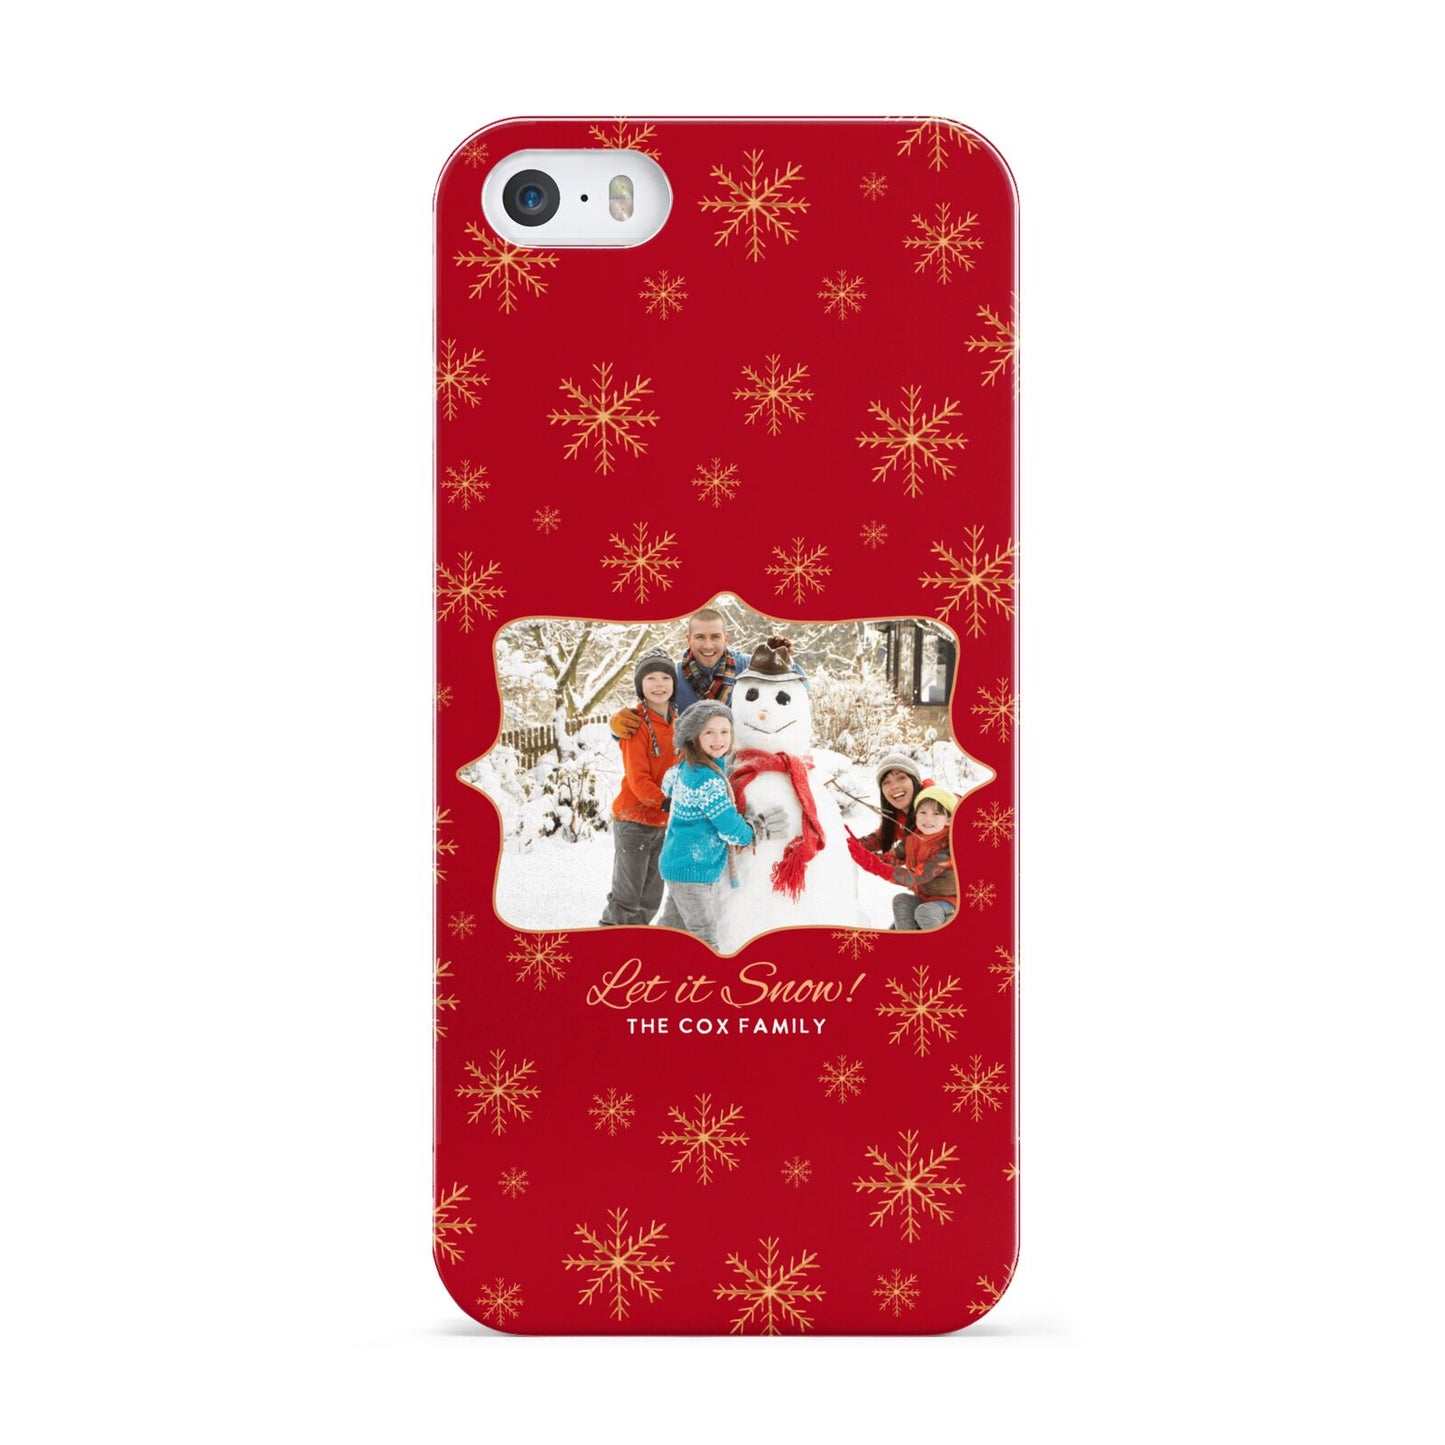 Let it Snow Christmas Photo Upload Apple iPhone 5 Case